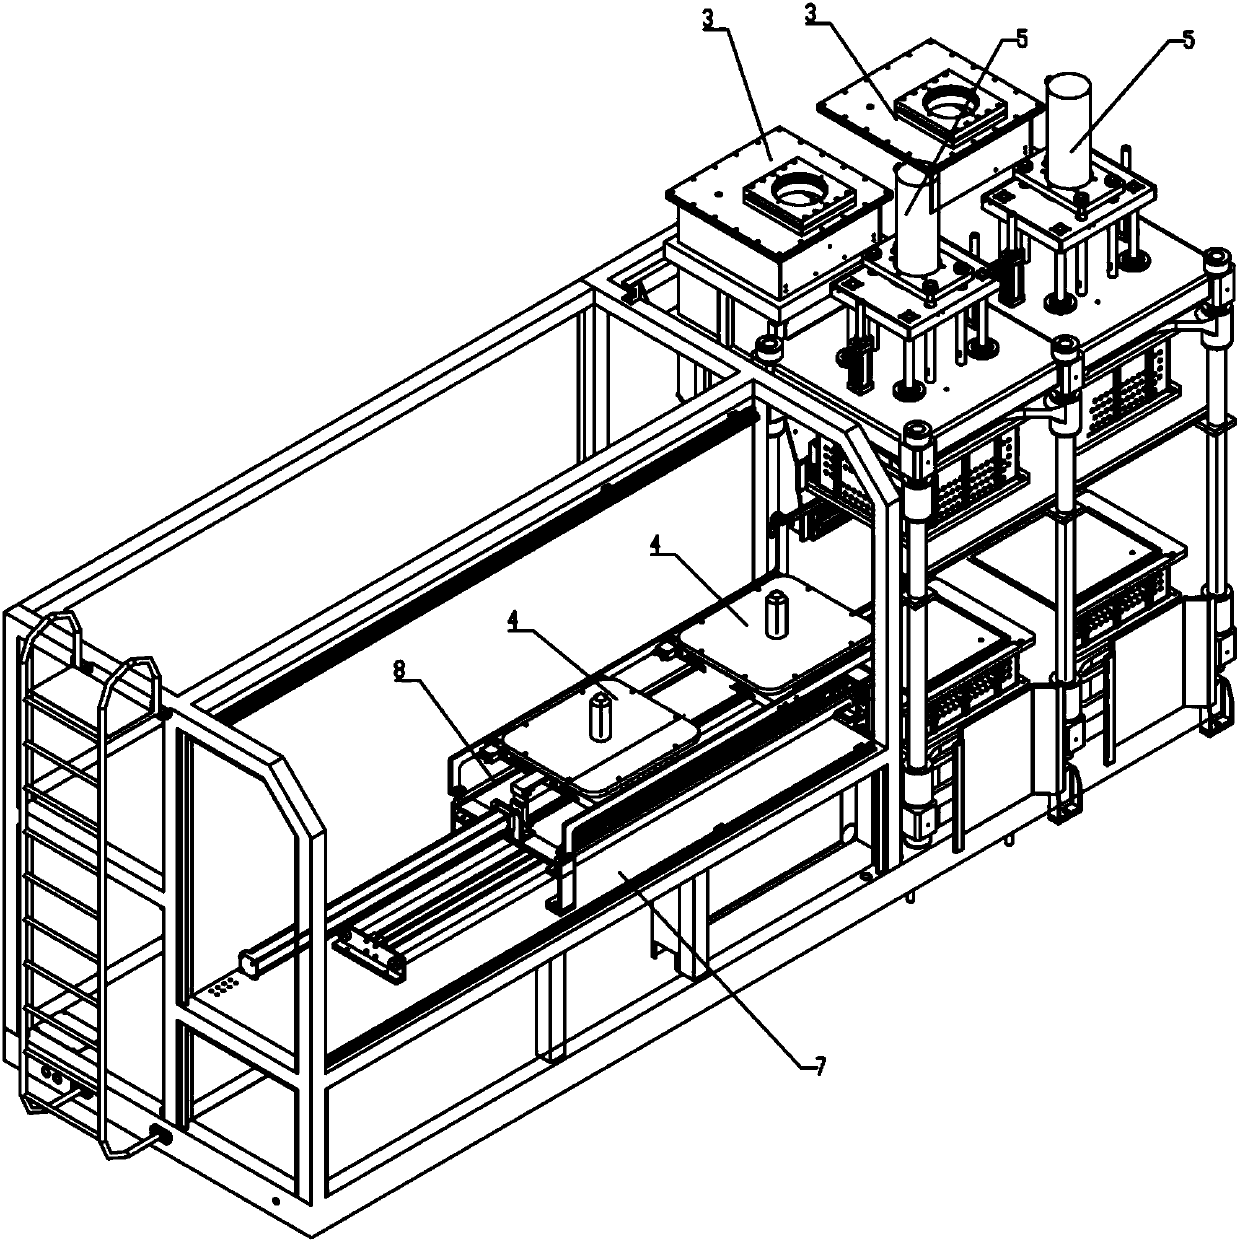 Multi-box synchronous molding machine